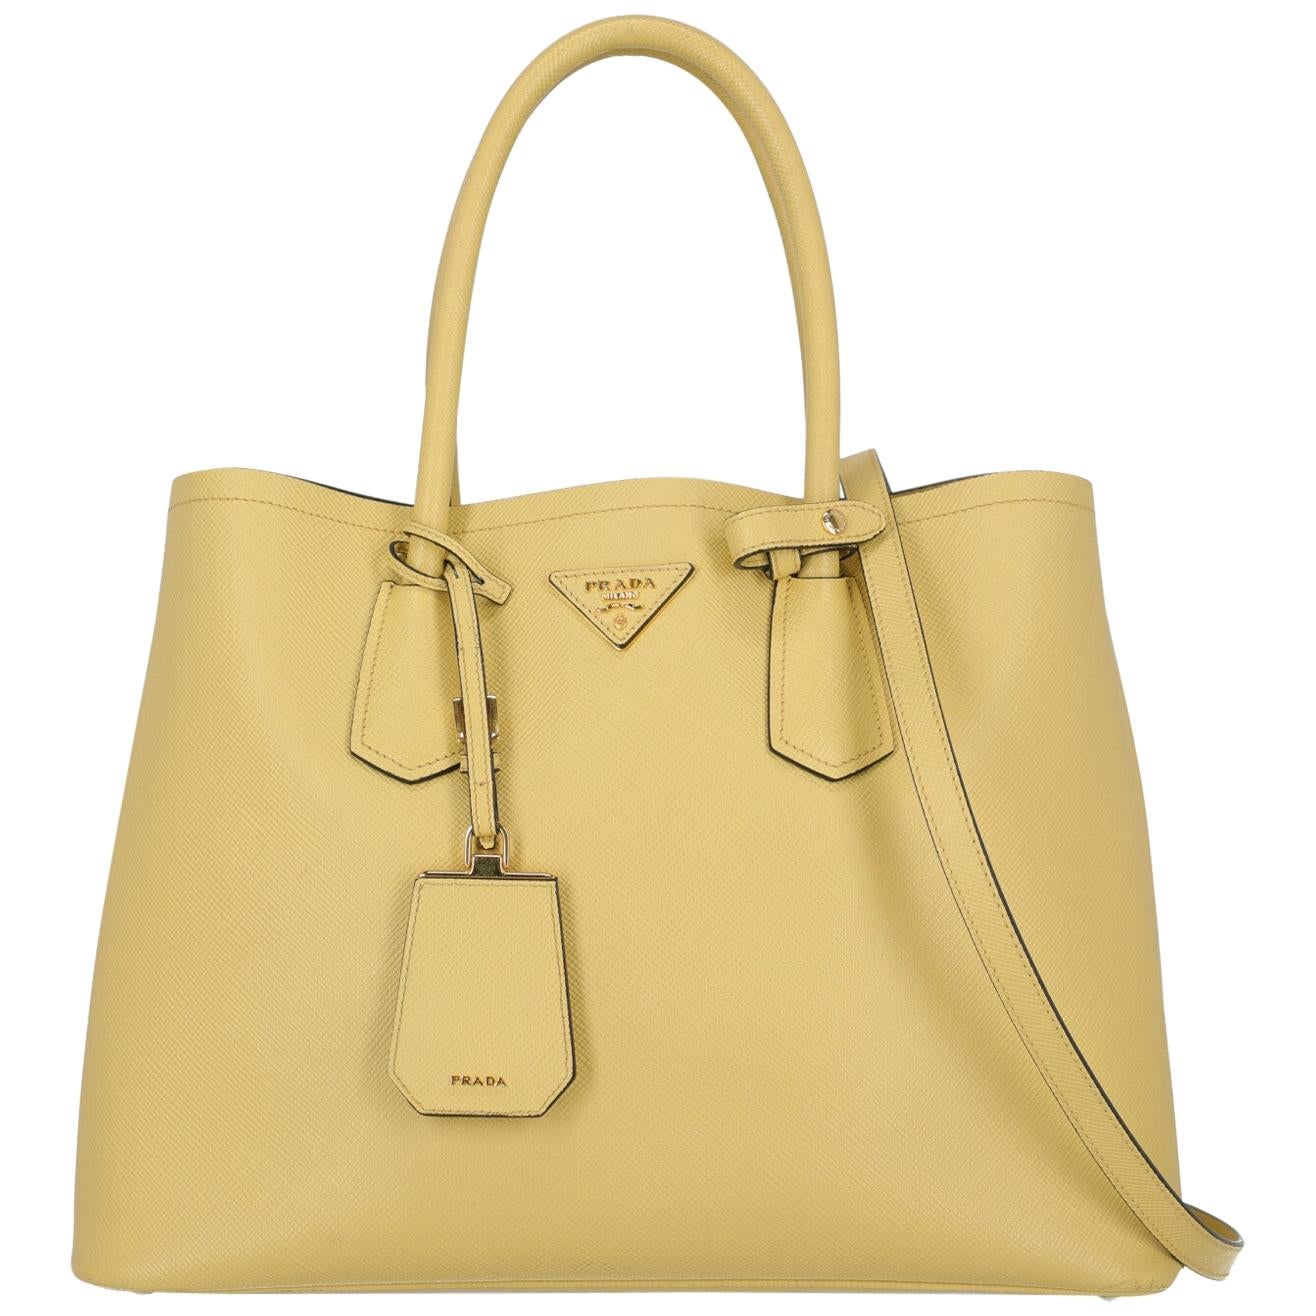 Prada Women's Handbag Double Yellow Leather